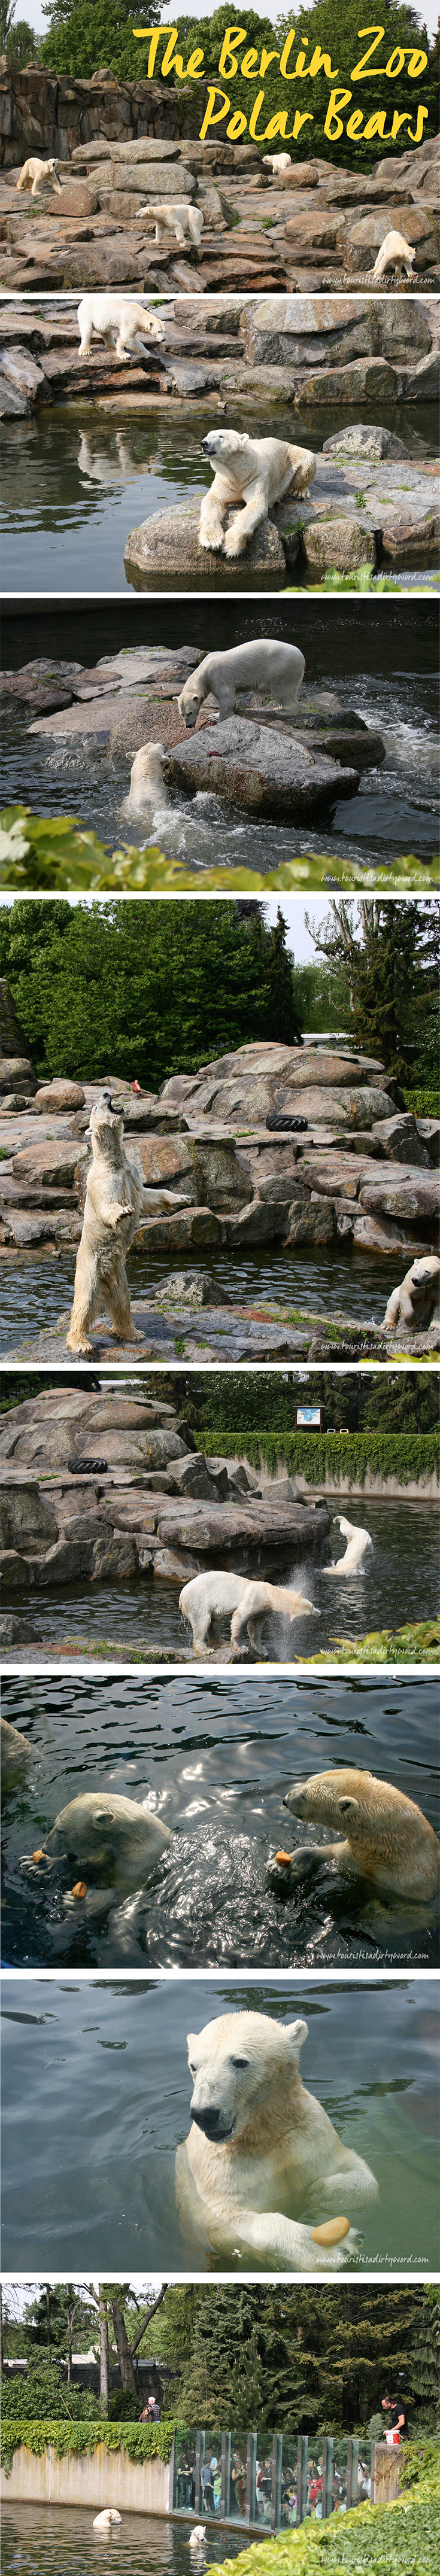 Polar Bear Feeding at the Berlin Zoo • Tourist is a Dirty Word Blog • Germany Travel